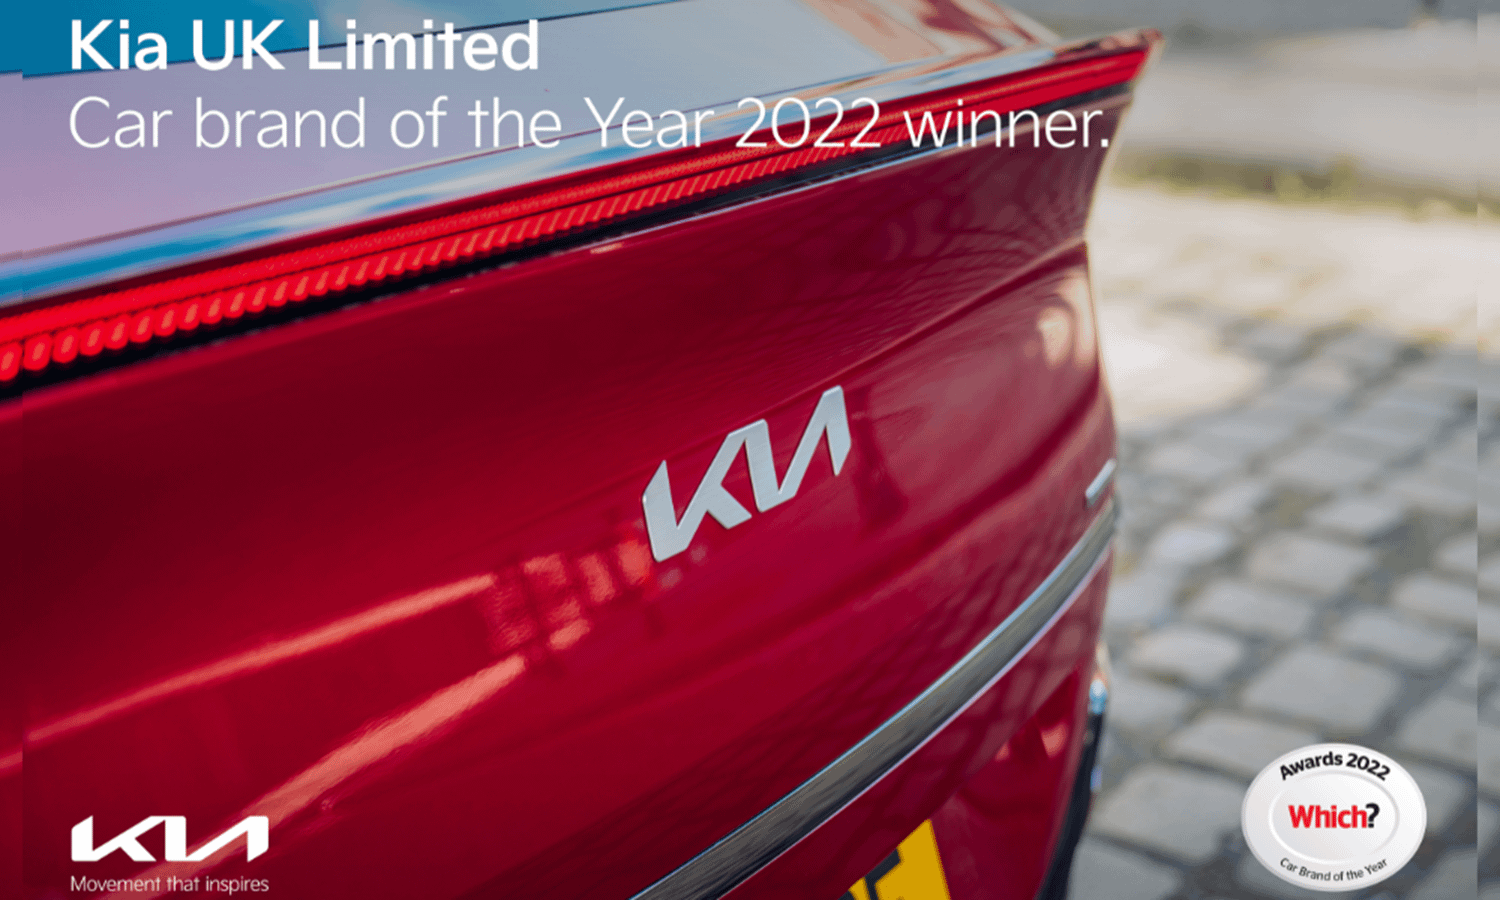 Kia EV6 rear with text that says Kia UK Car brand of the Year 2022 winner